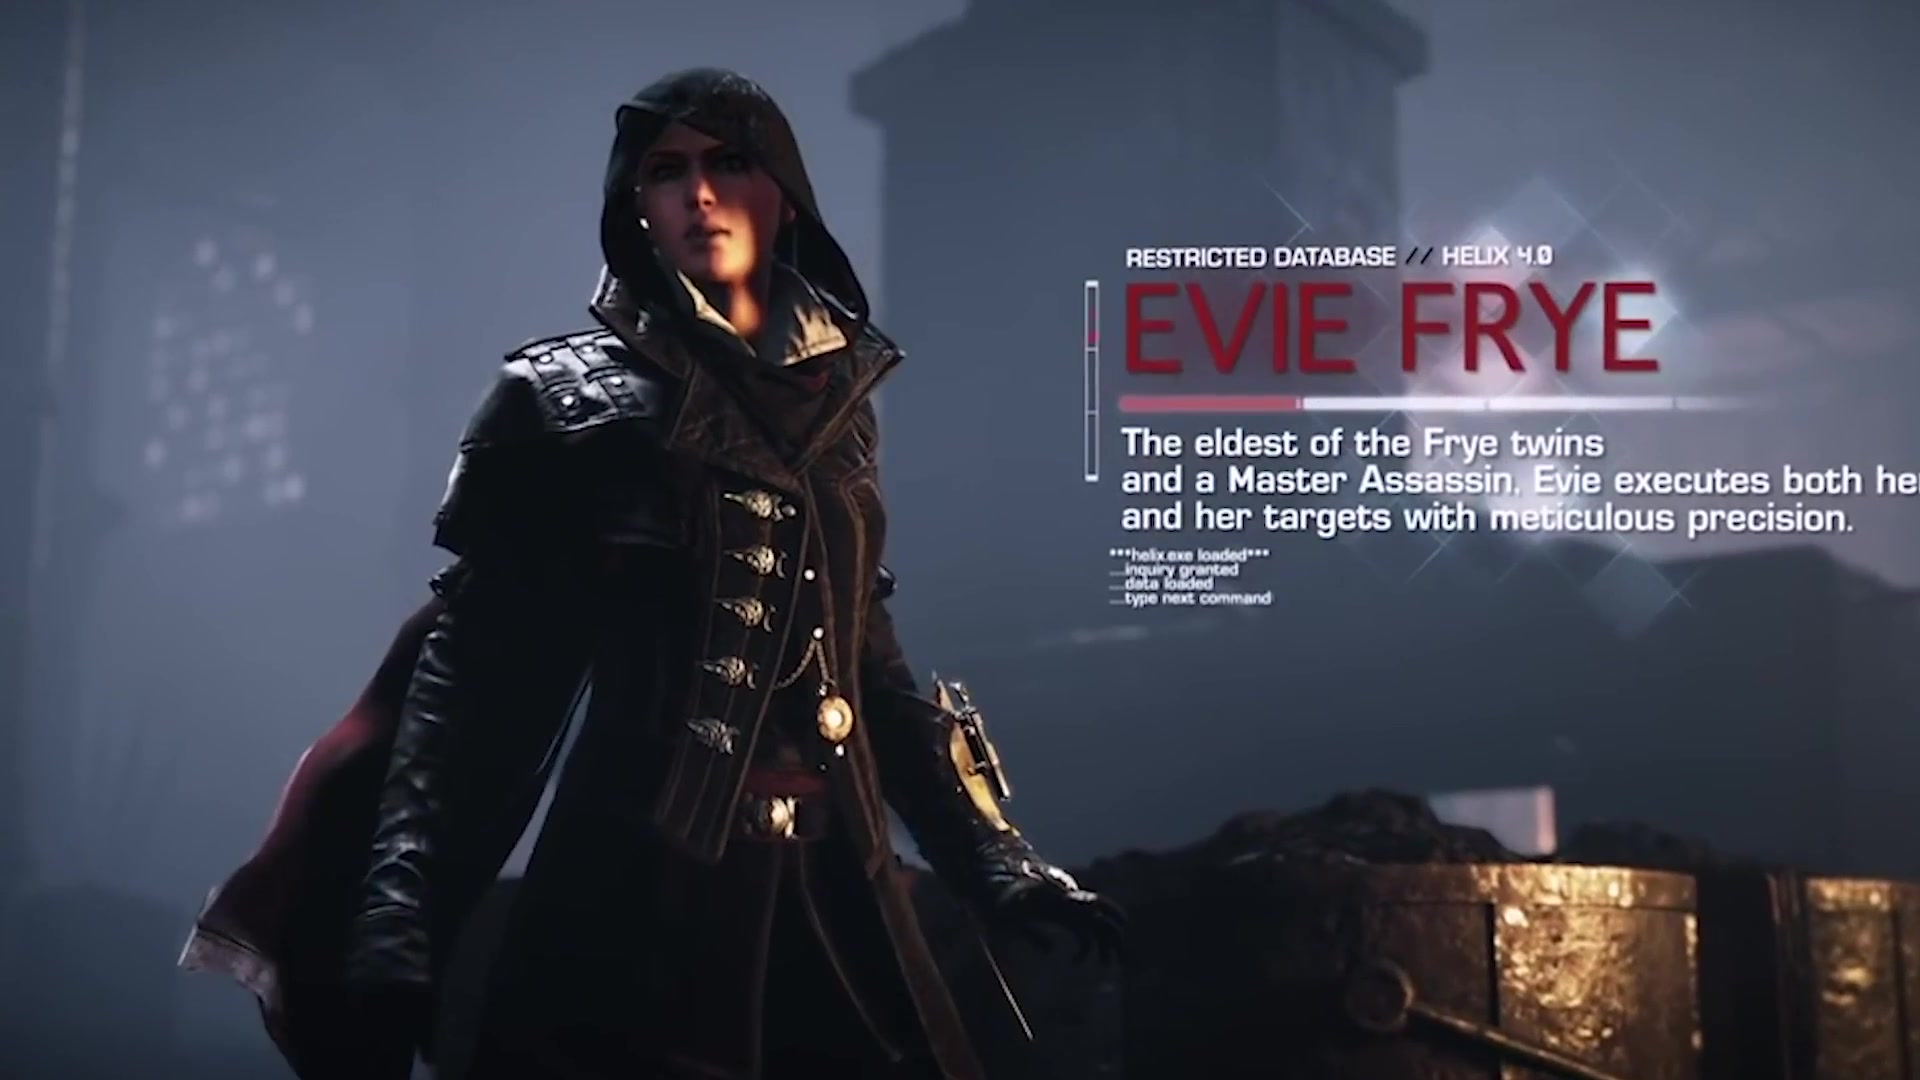 Assassin's Creed Syndicate Evie Frye Poster A3 A4 5x7 Satin Matt Gloss